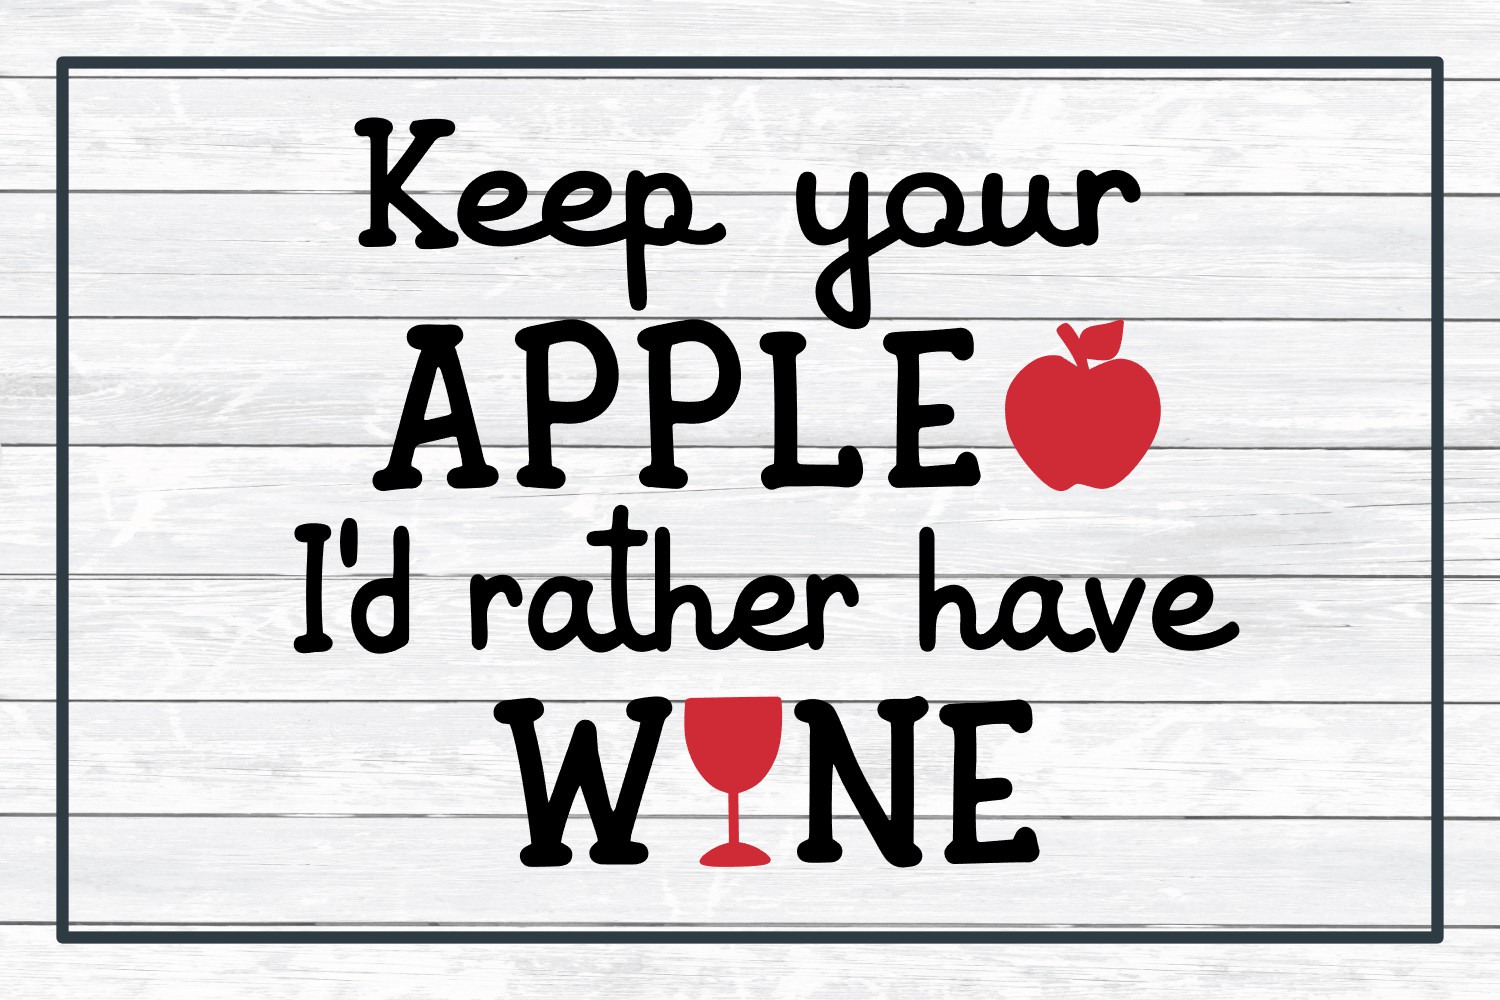 Download Teachers Drinking Wine Bundle - Teacher SVG Cut File ...